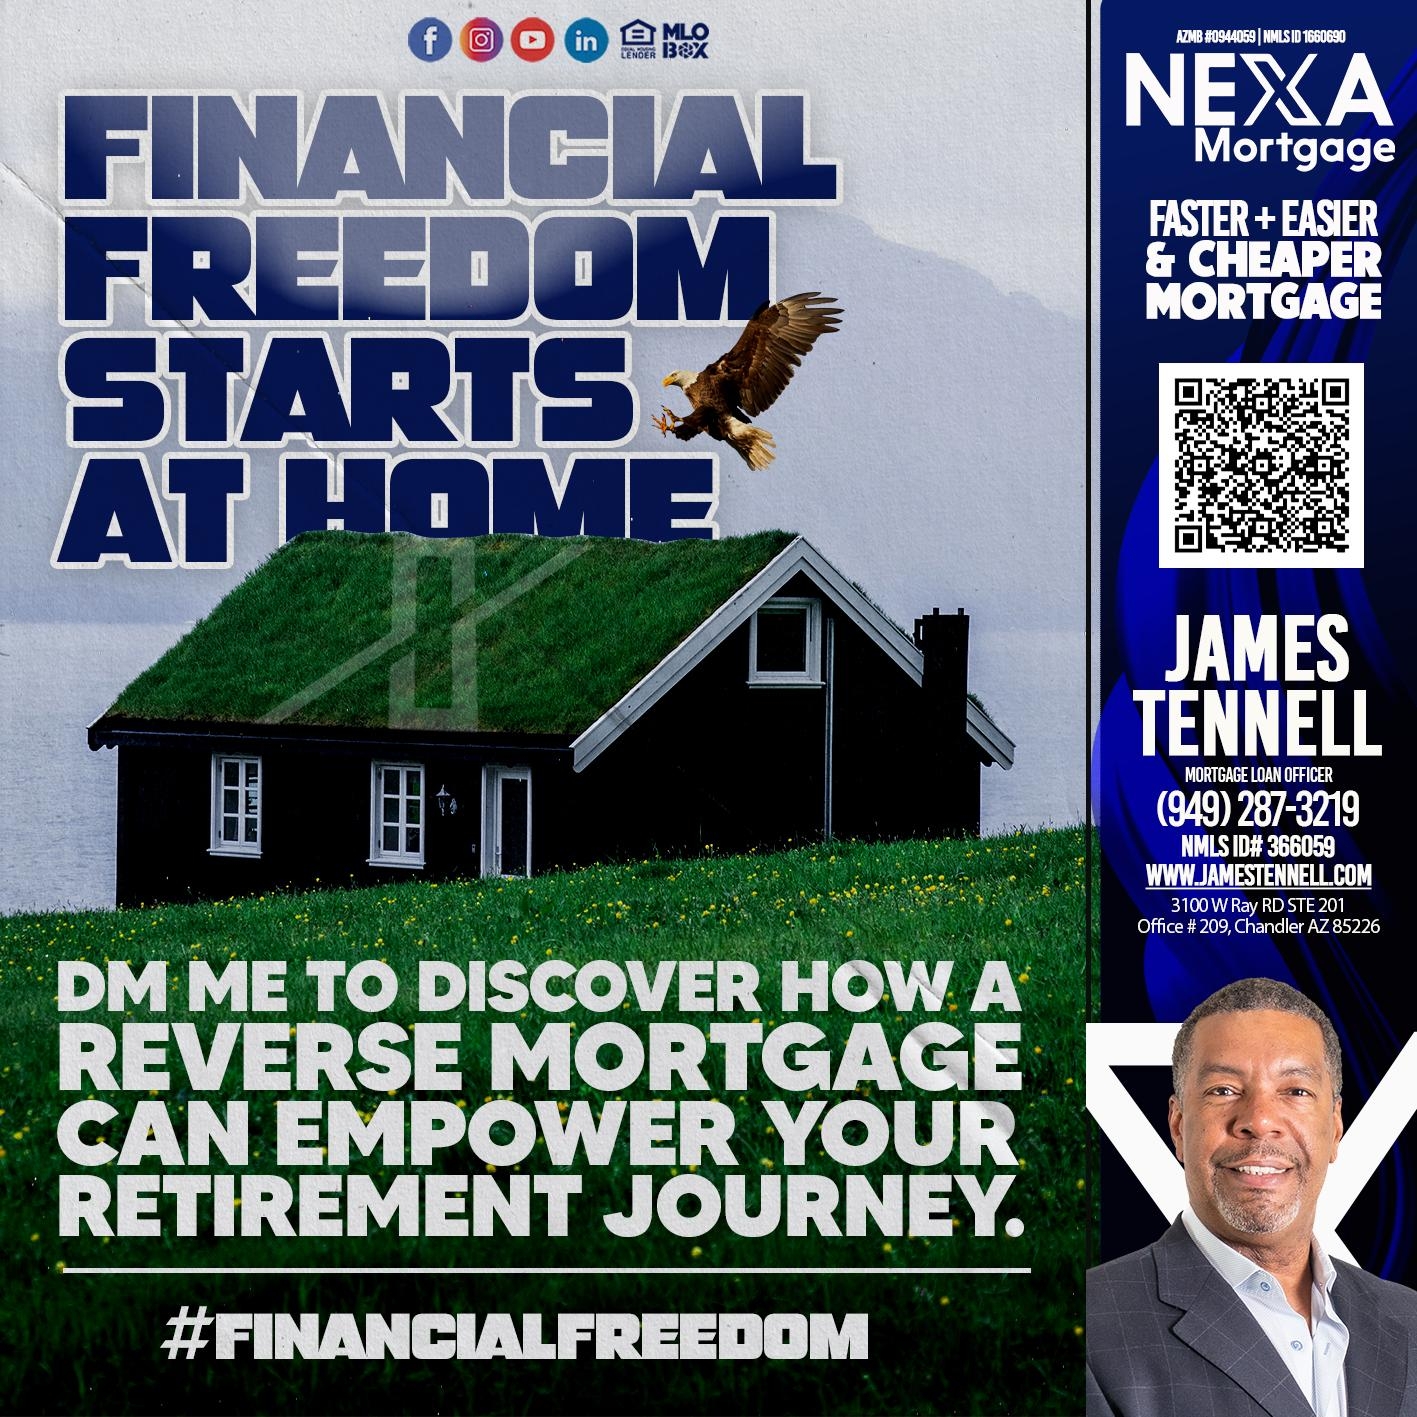 FINANCIAL FREEDOM - James Tennell - Mortgage Loan Originator